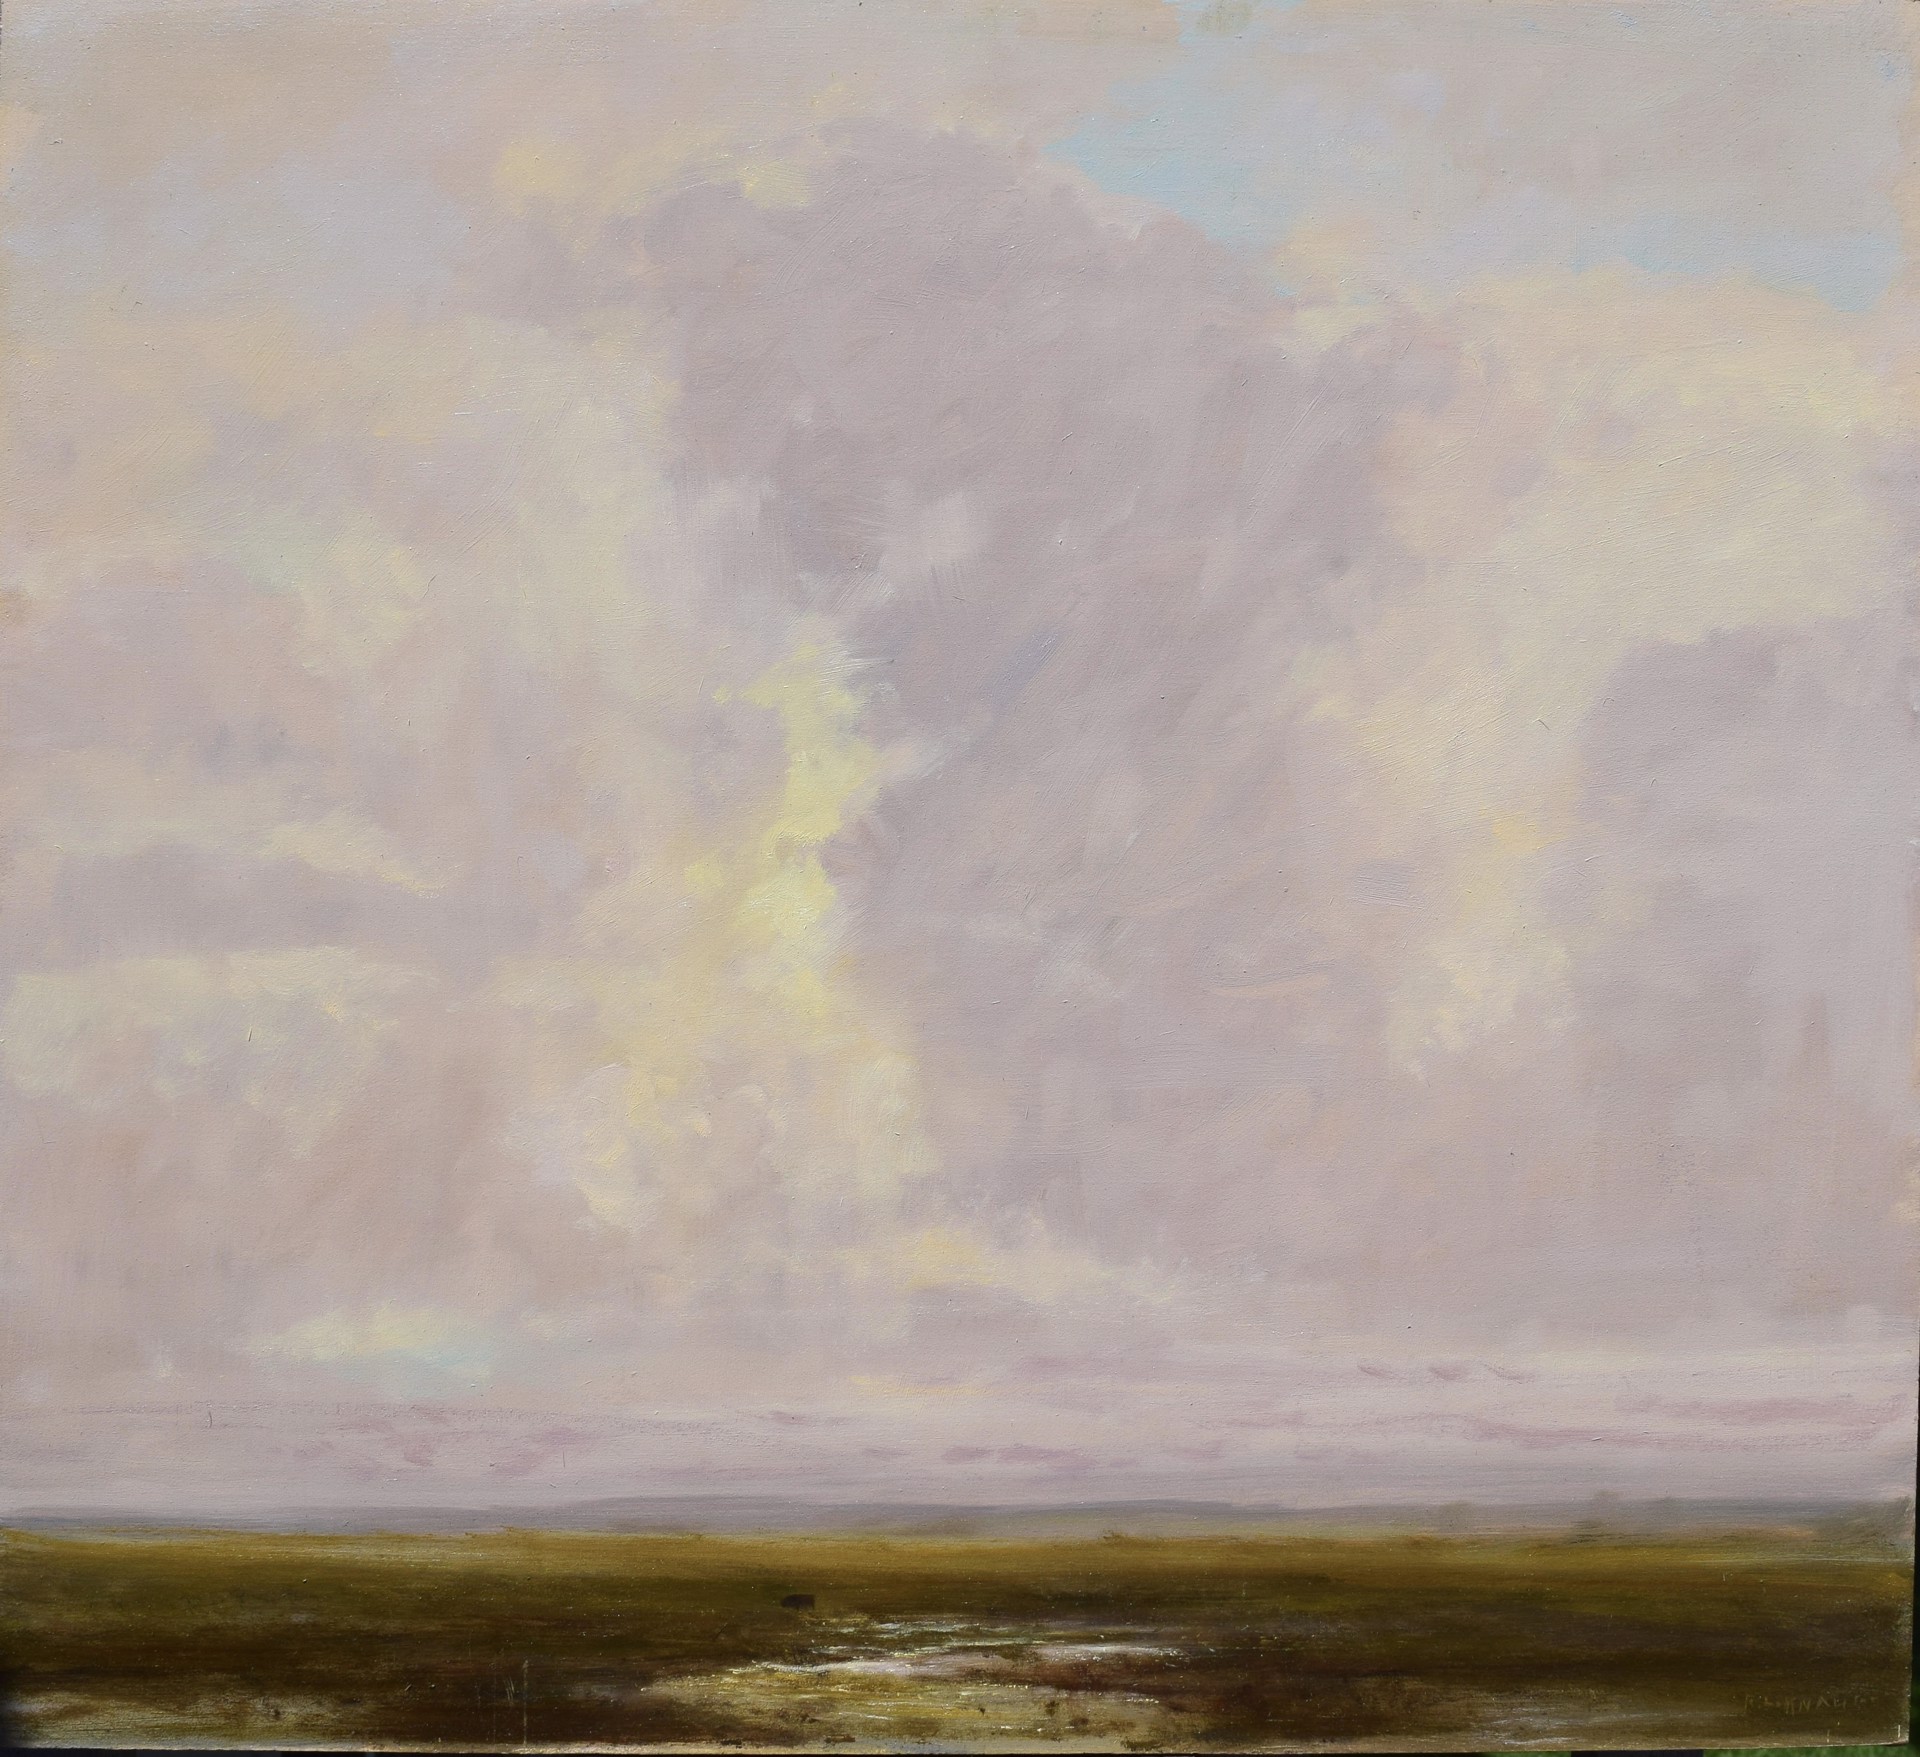 Beneath the Prairie Skies by Ray L. Knaub